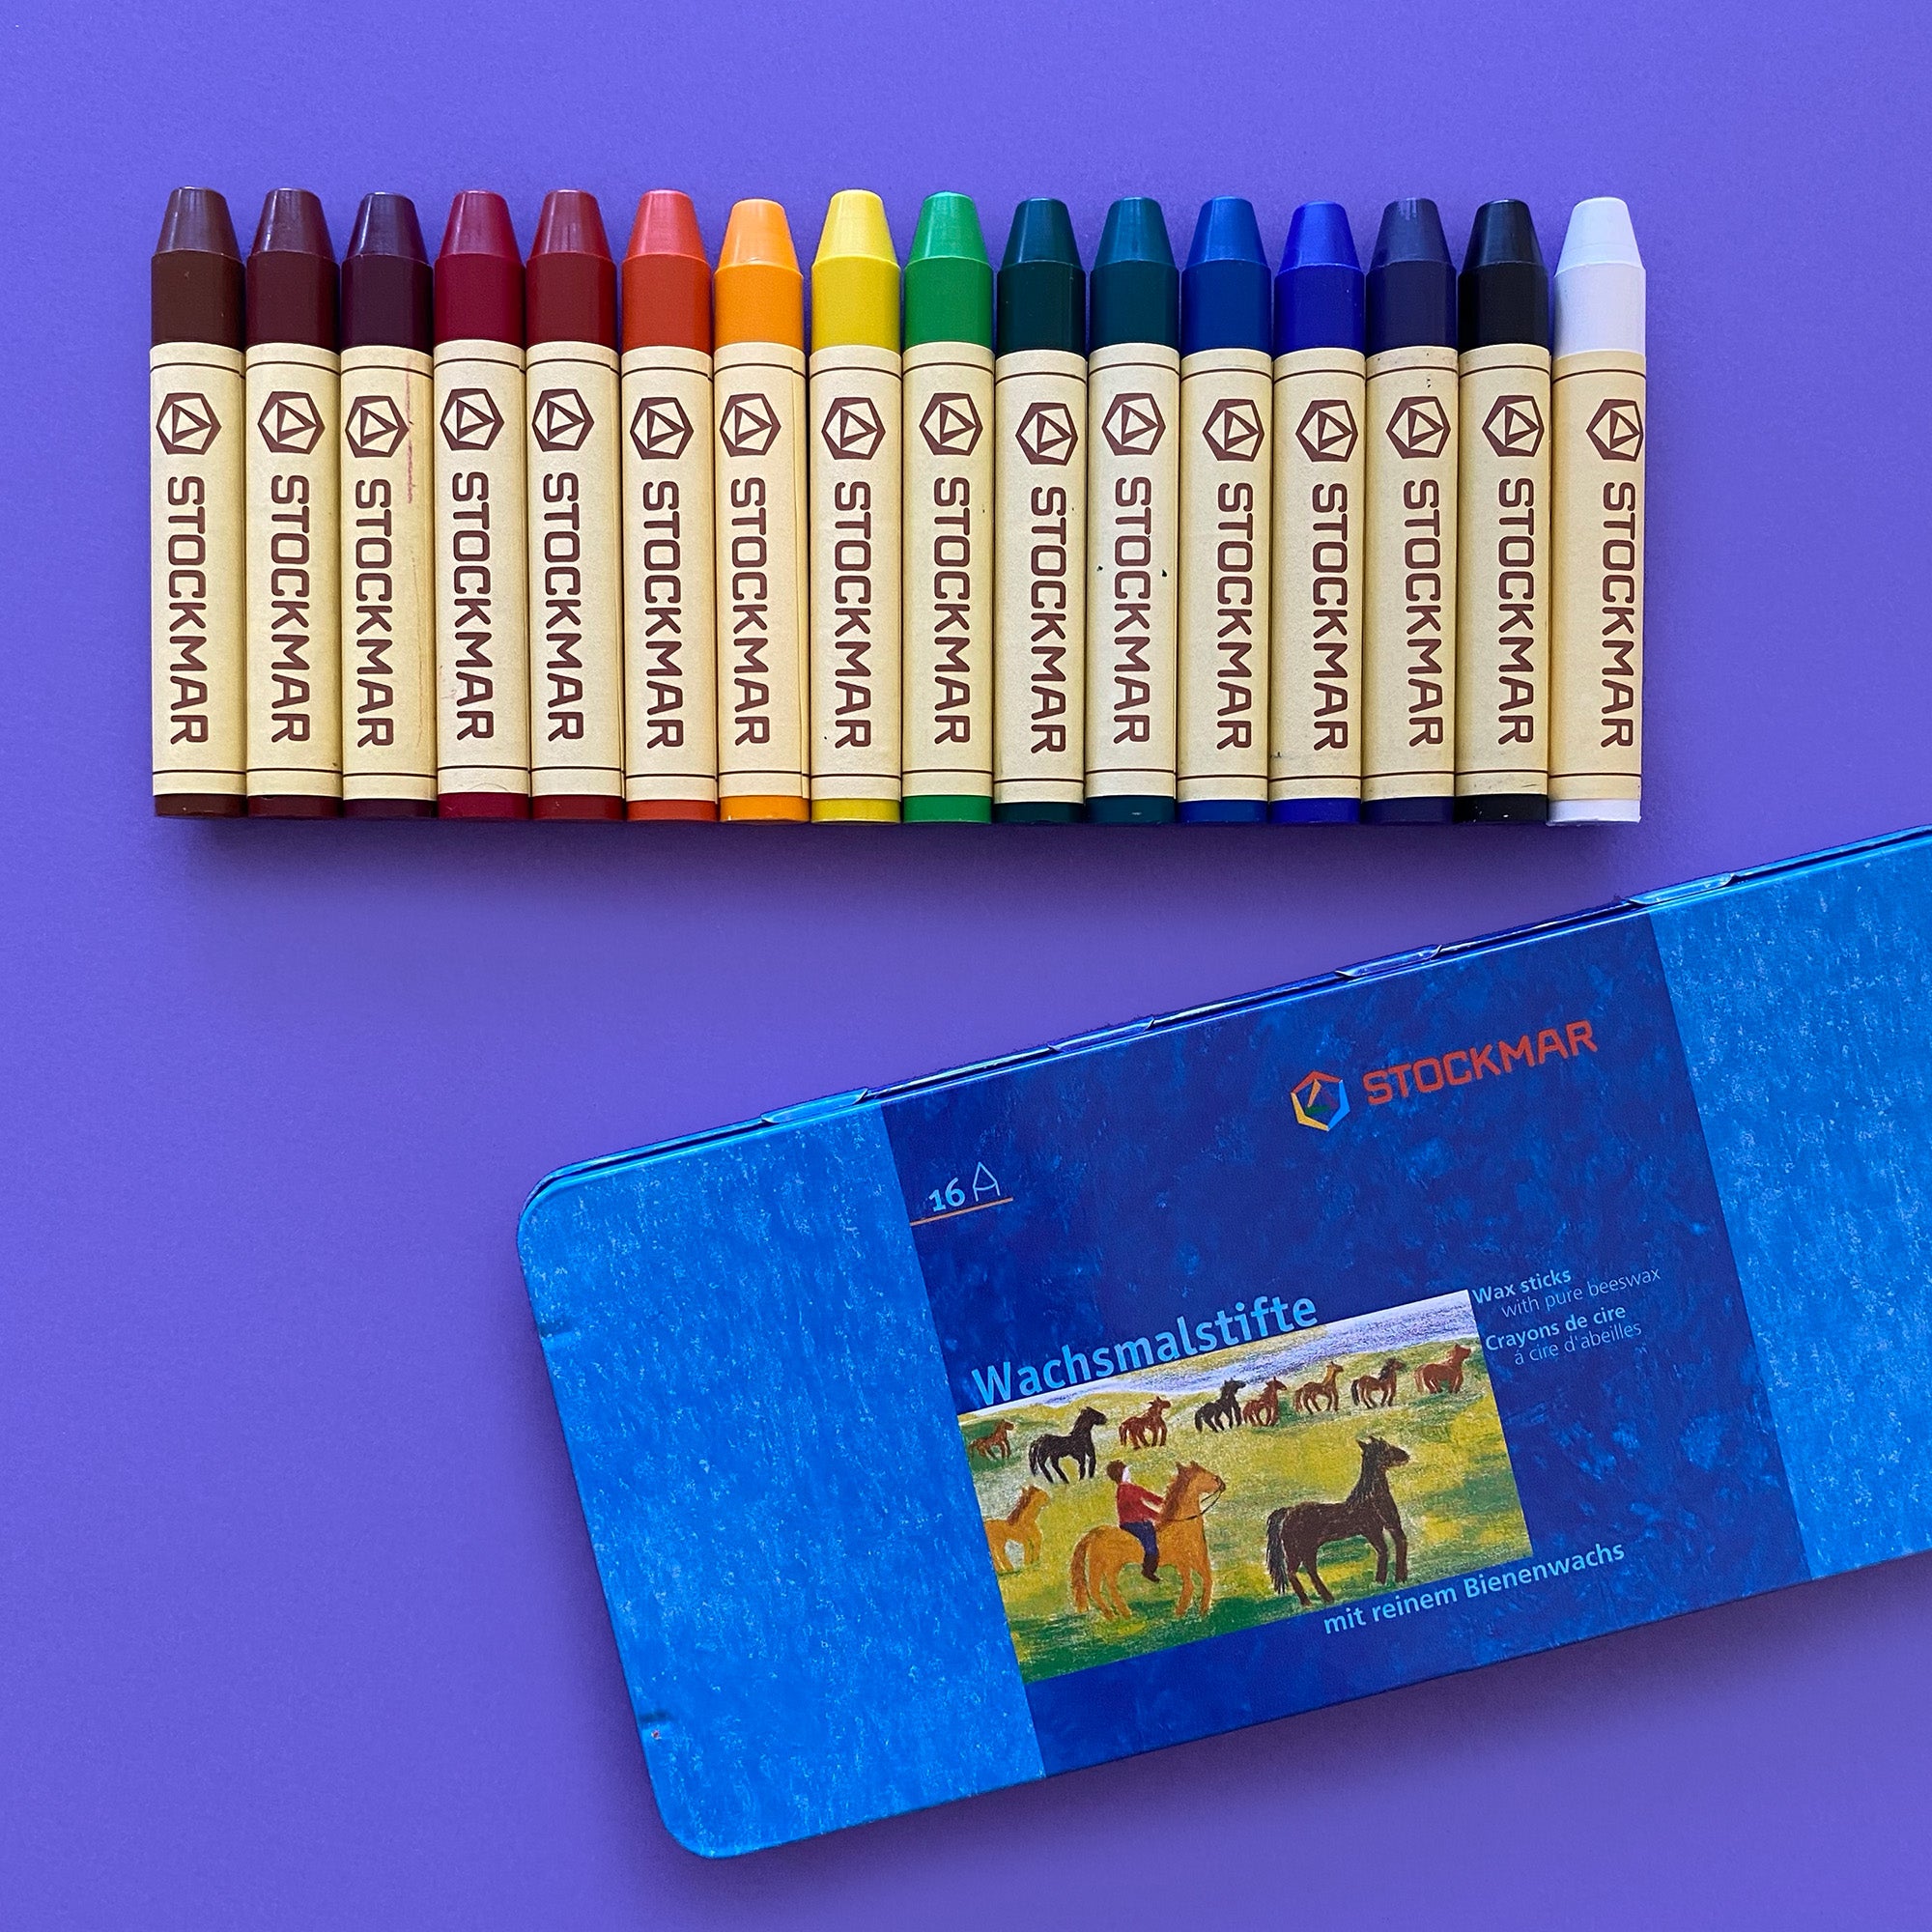 Stockmar Beeswax Crayons - 8 Colors, Stick